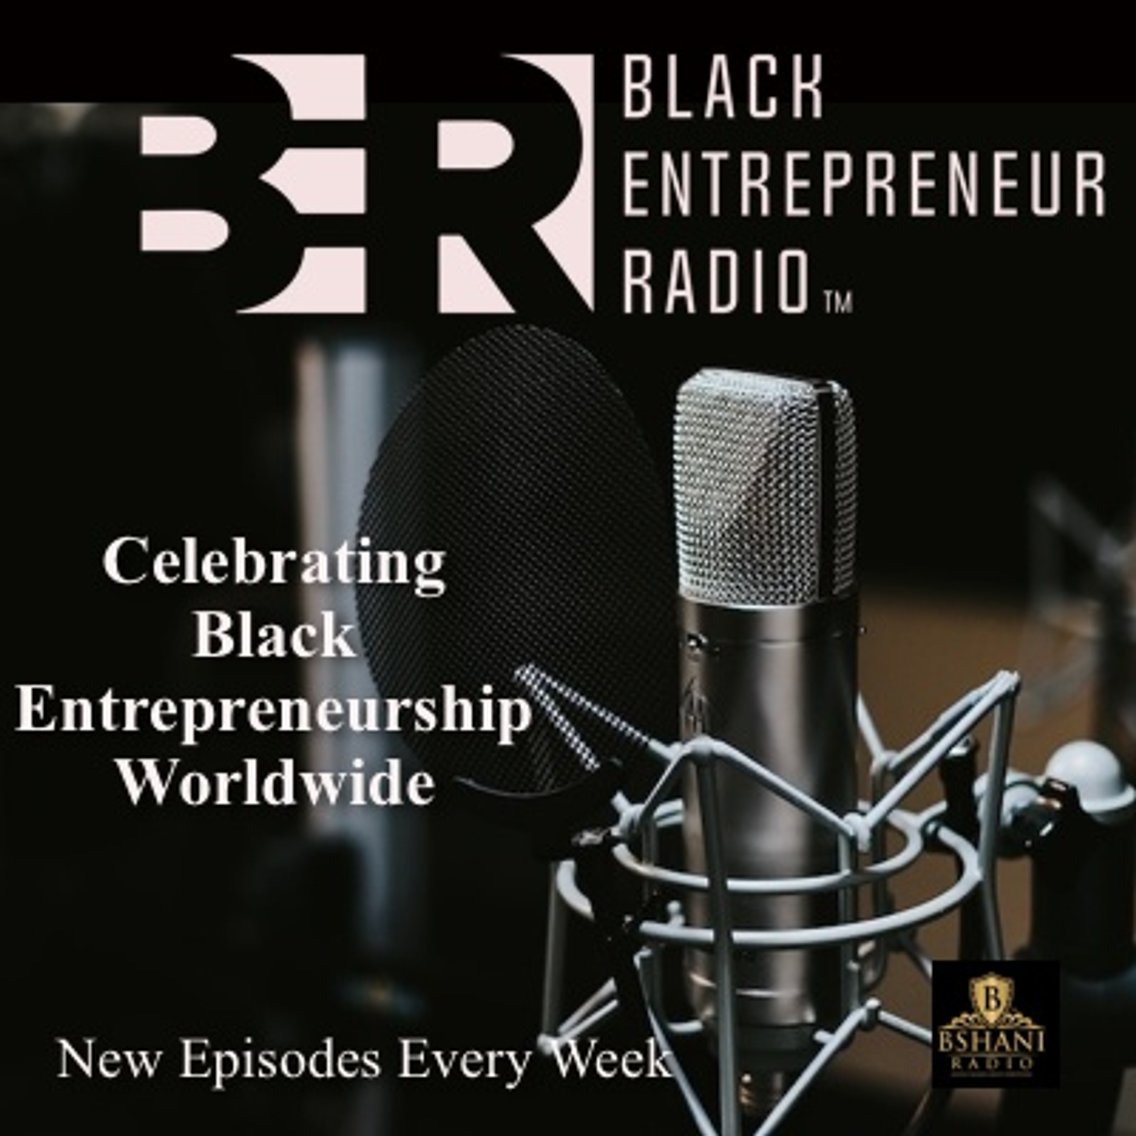 Black Entrepreneur Radio - immagine di copertina
